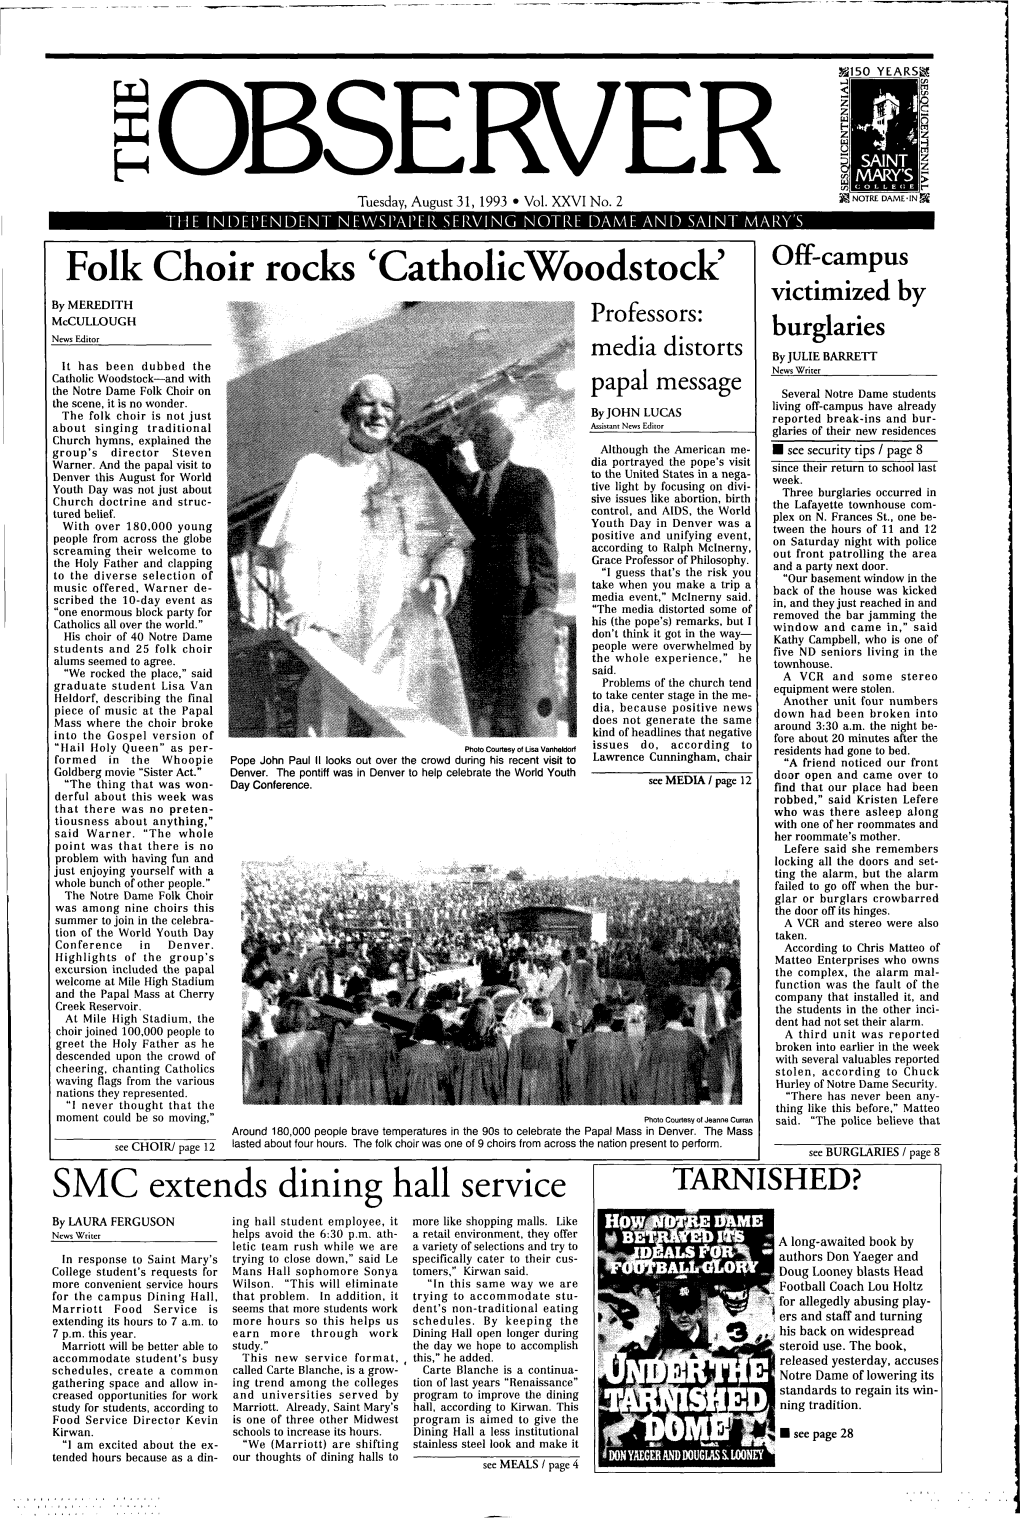 Folk Choir Rocks 'Catholic Woodstock'